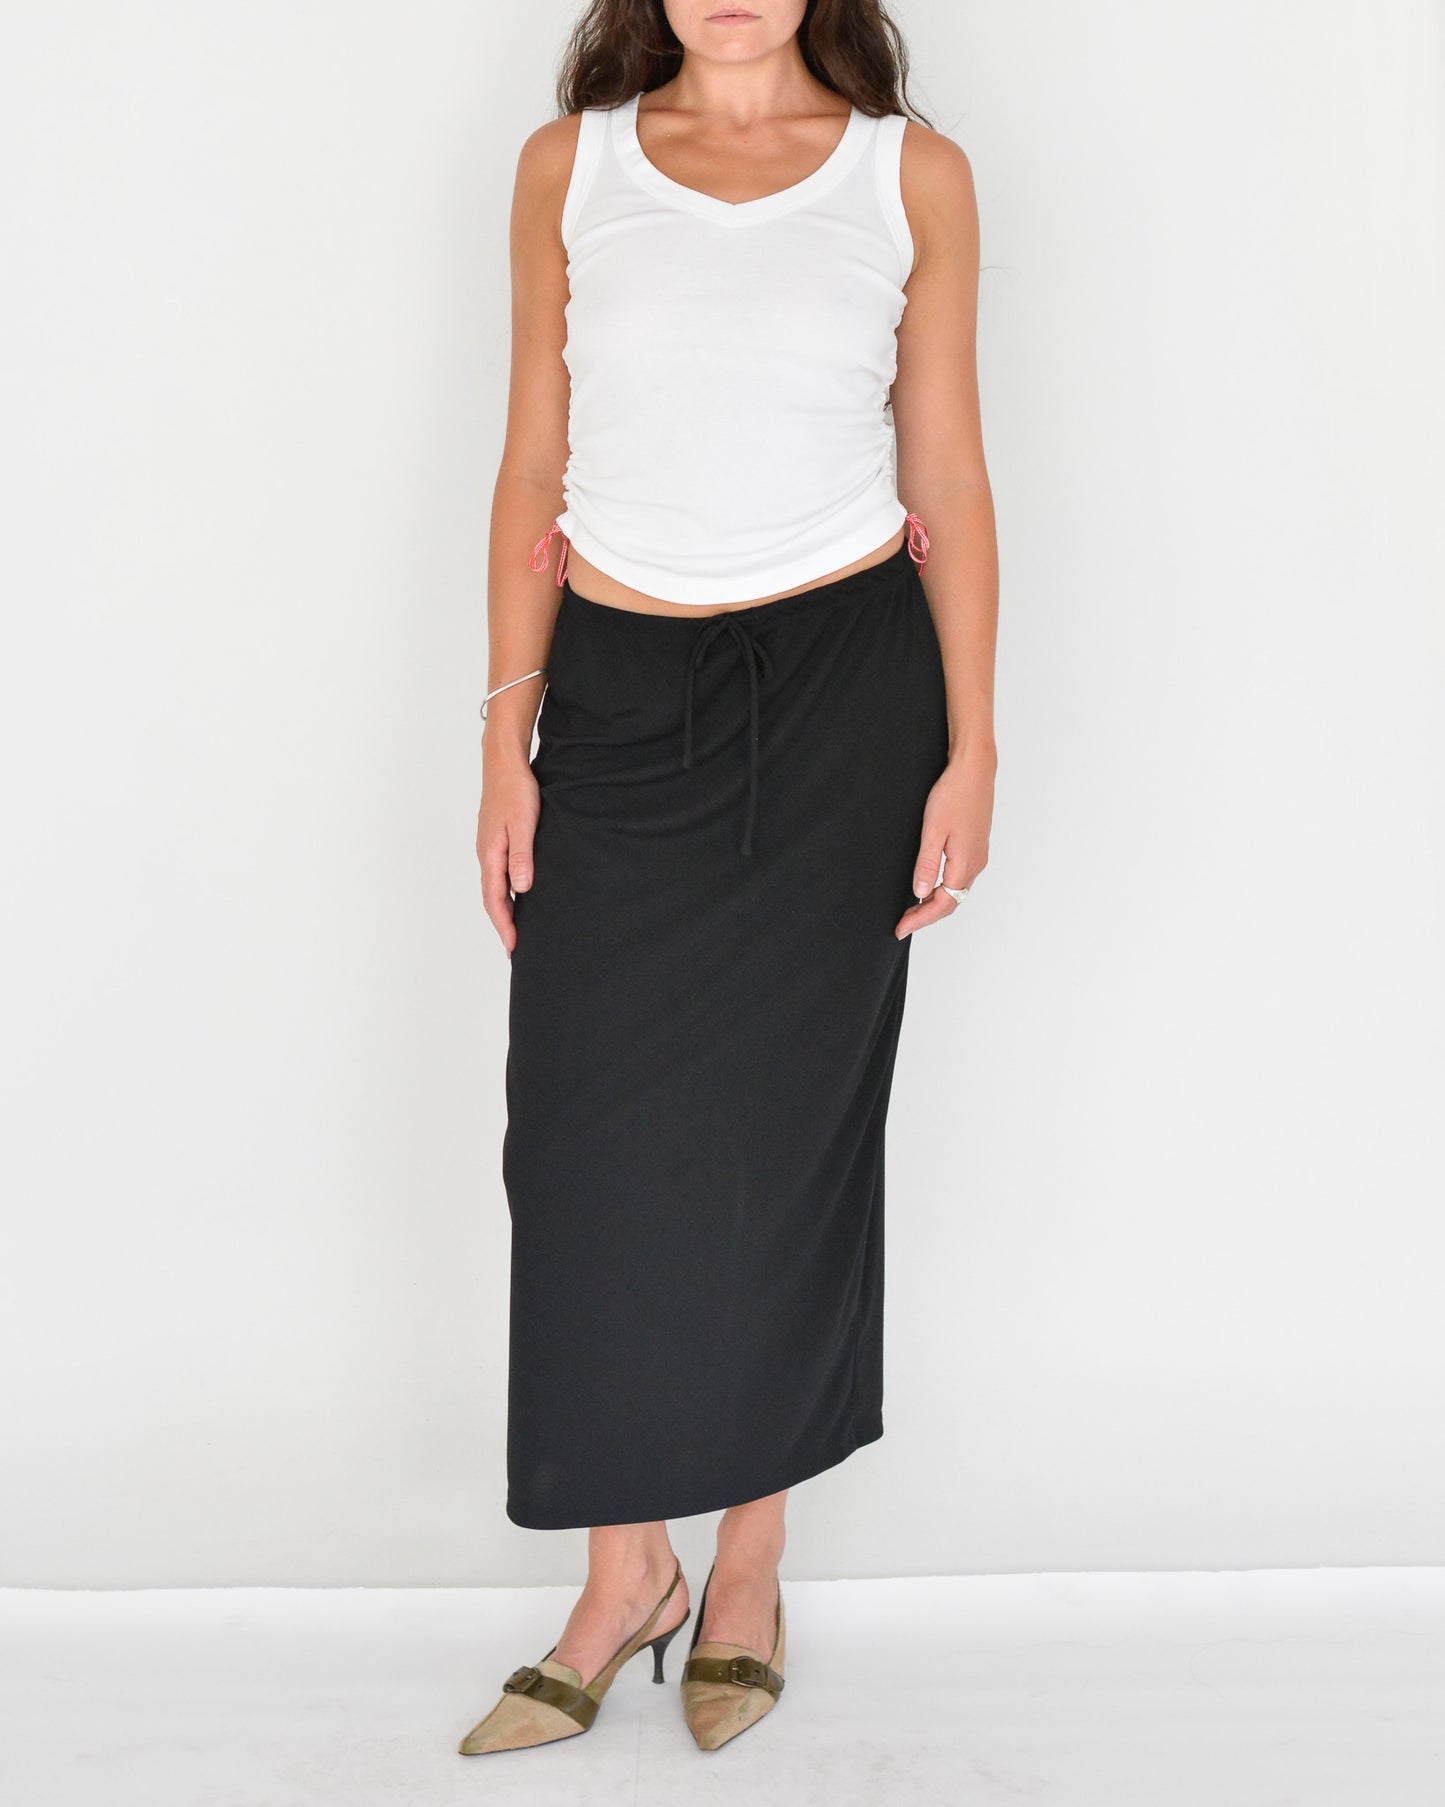 Black Drawstring Skirt (M-L)